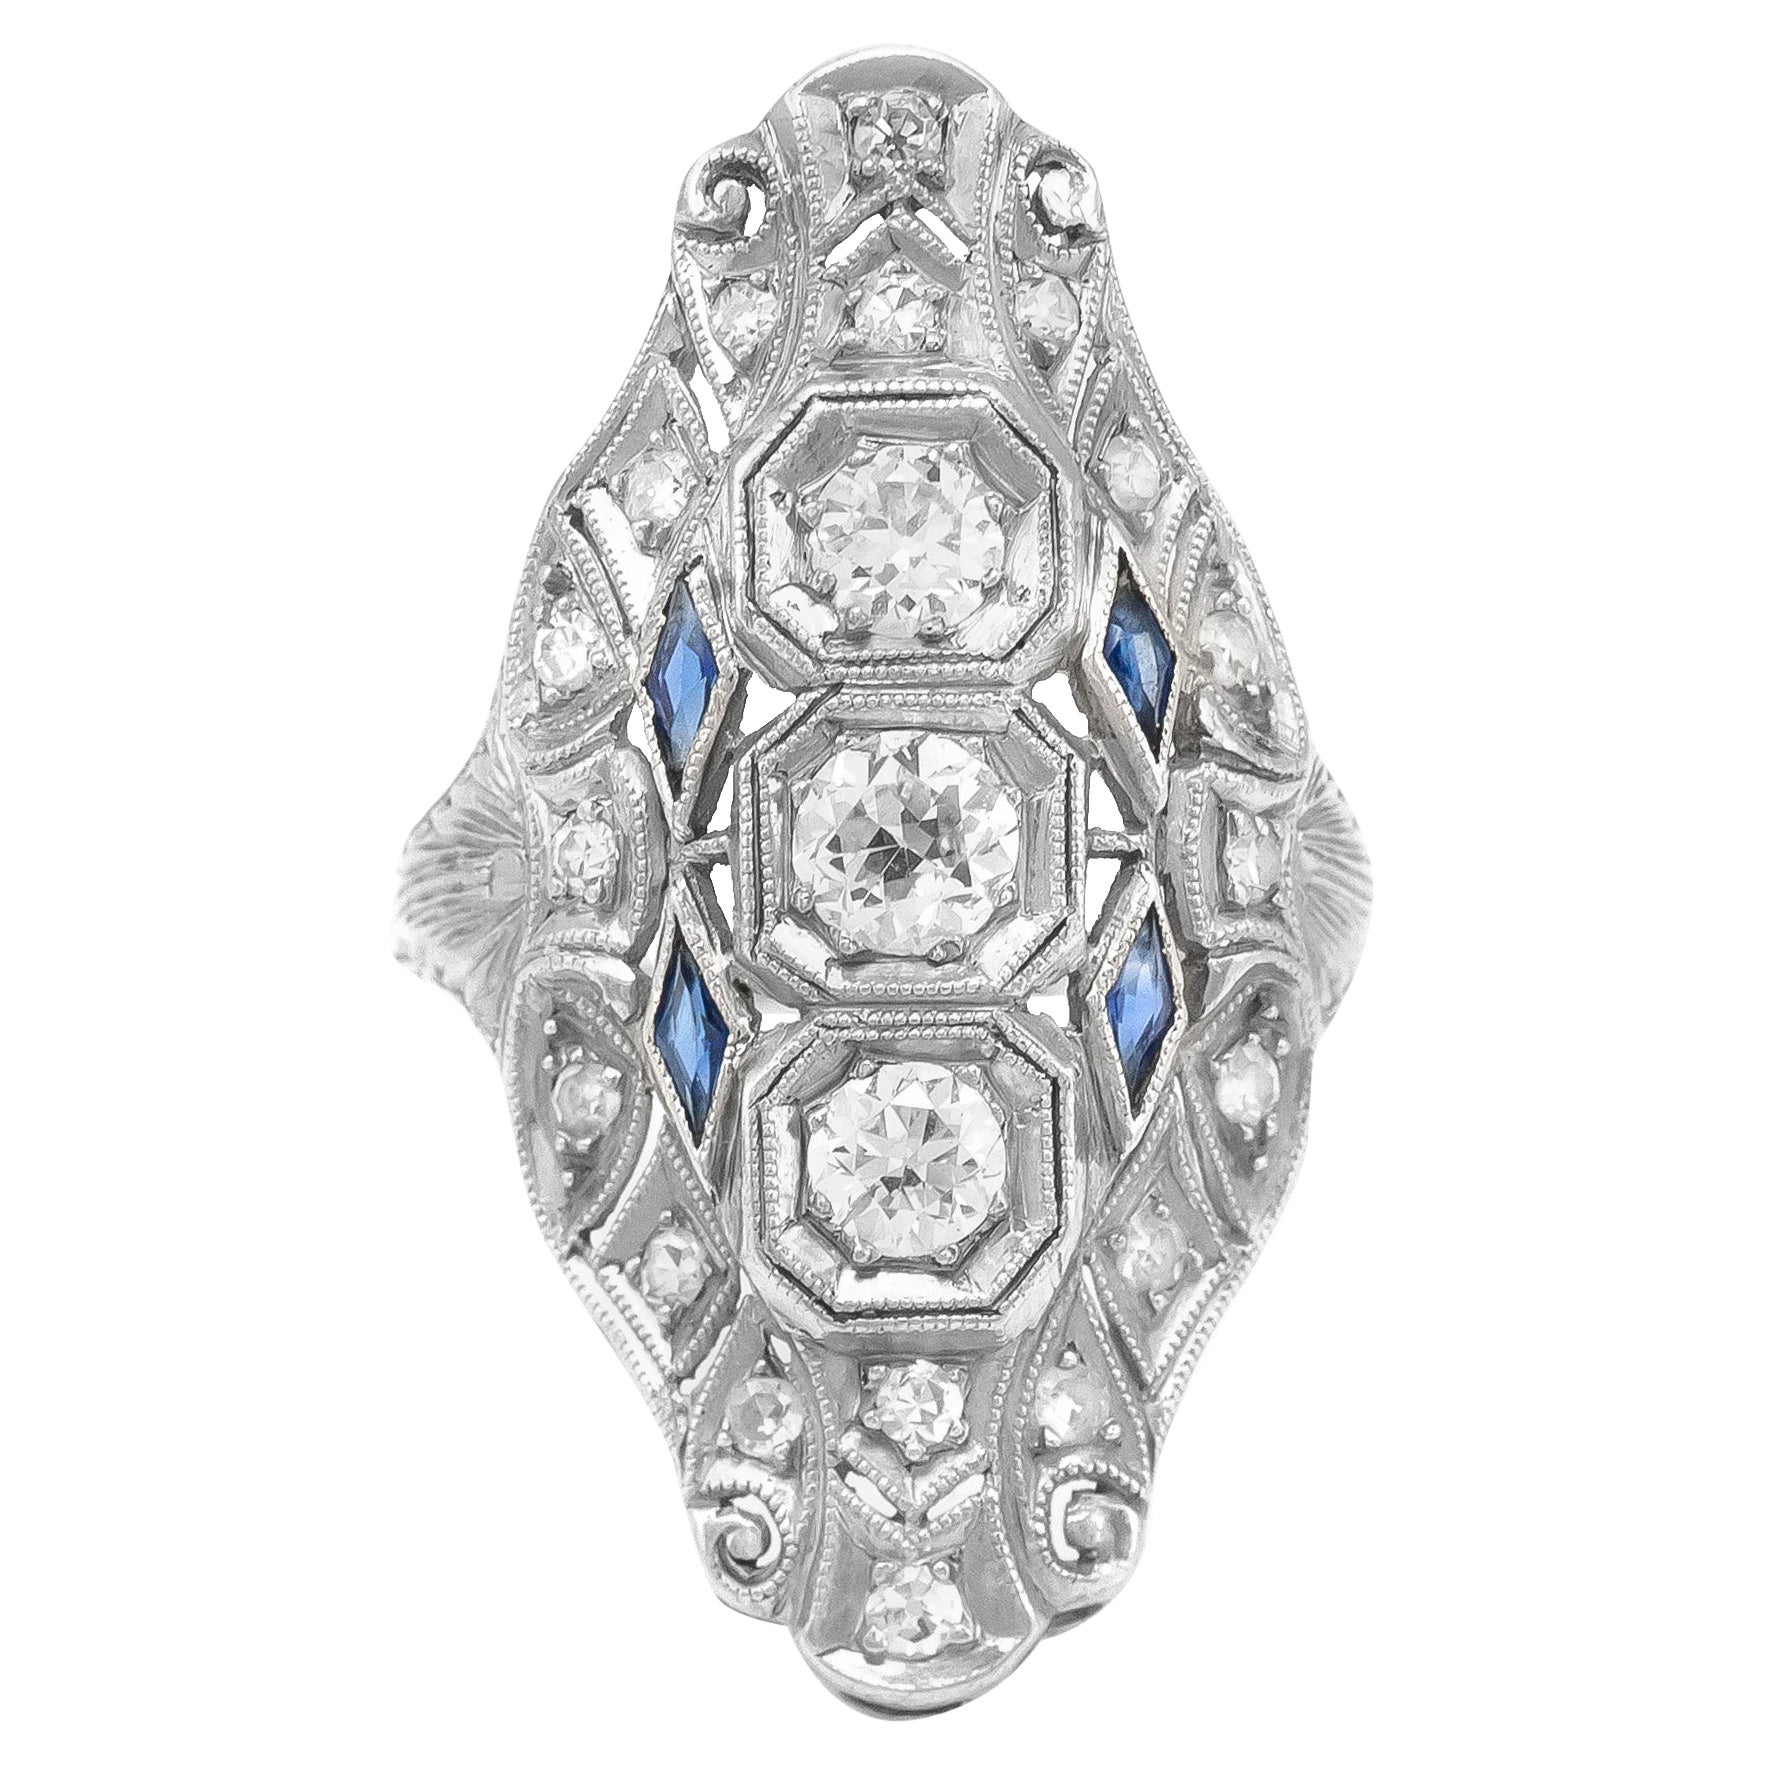 1.60 Carat Art Deco Diamond Dinner Ring with Sapphires